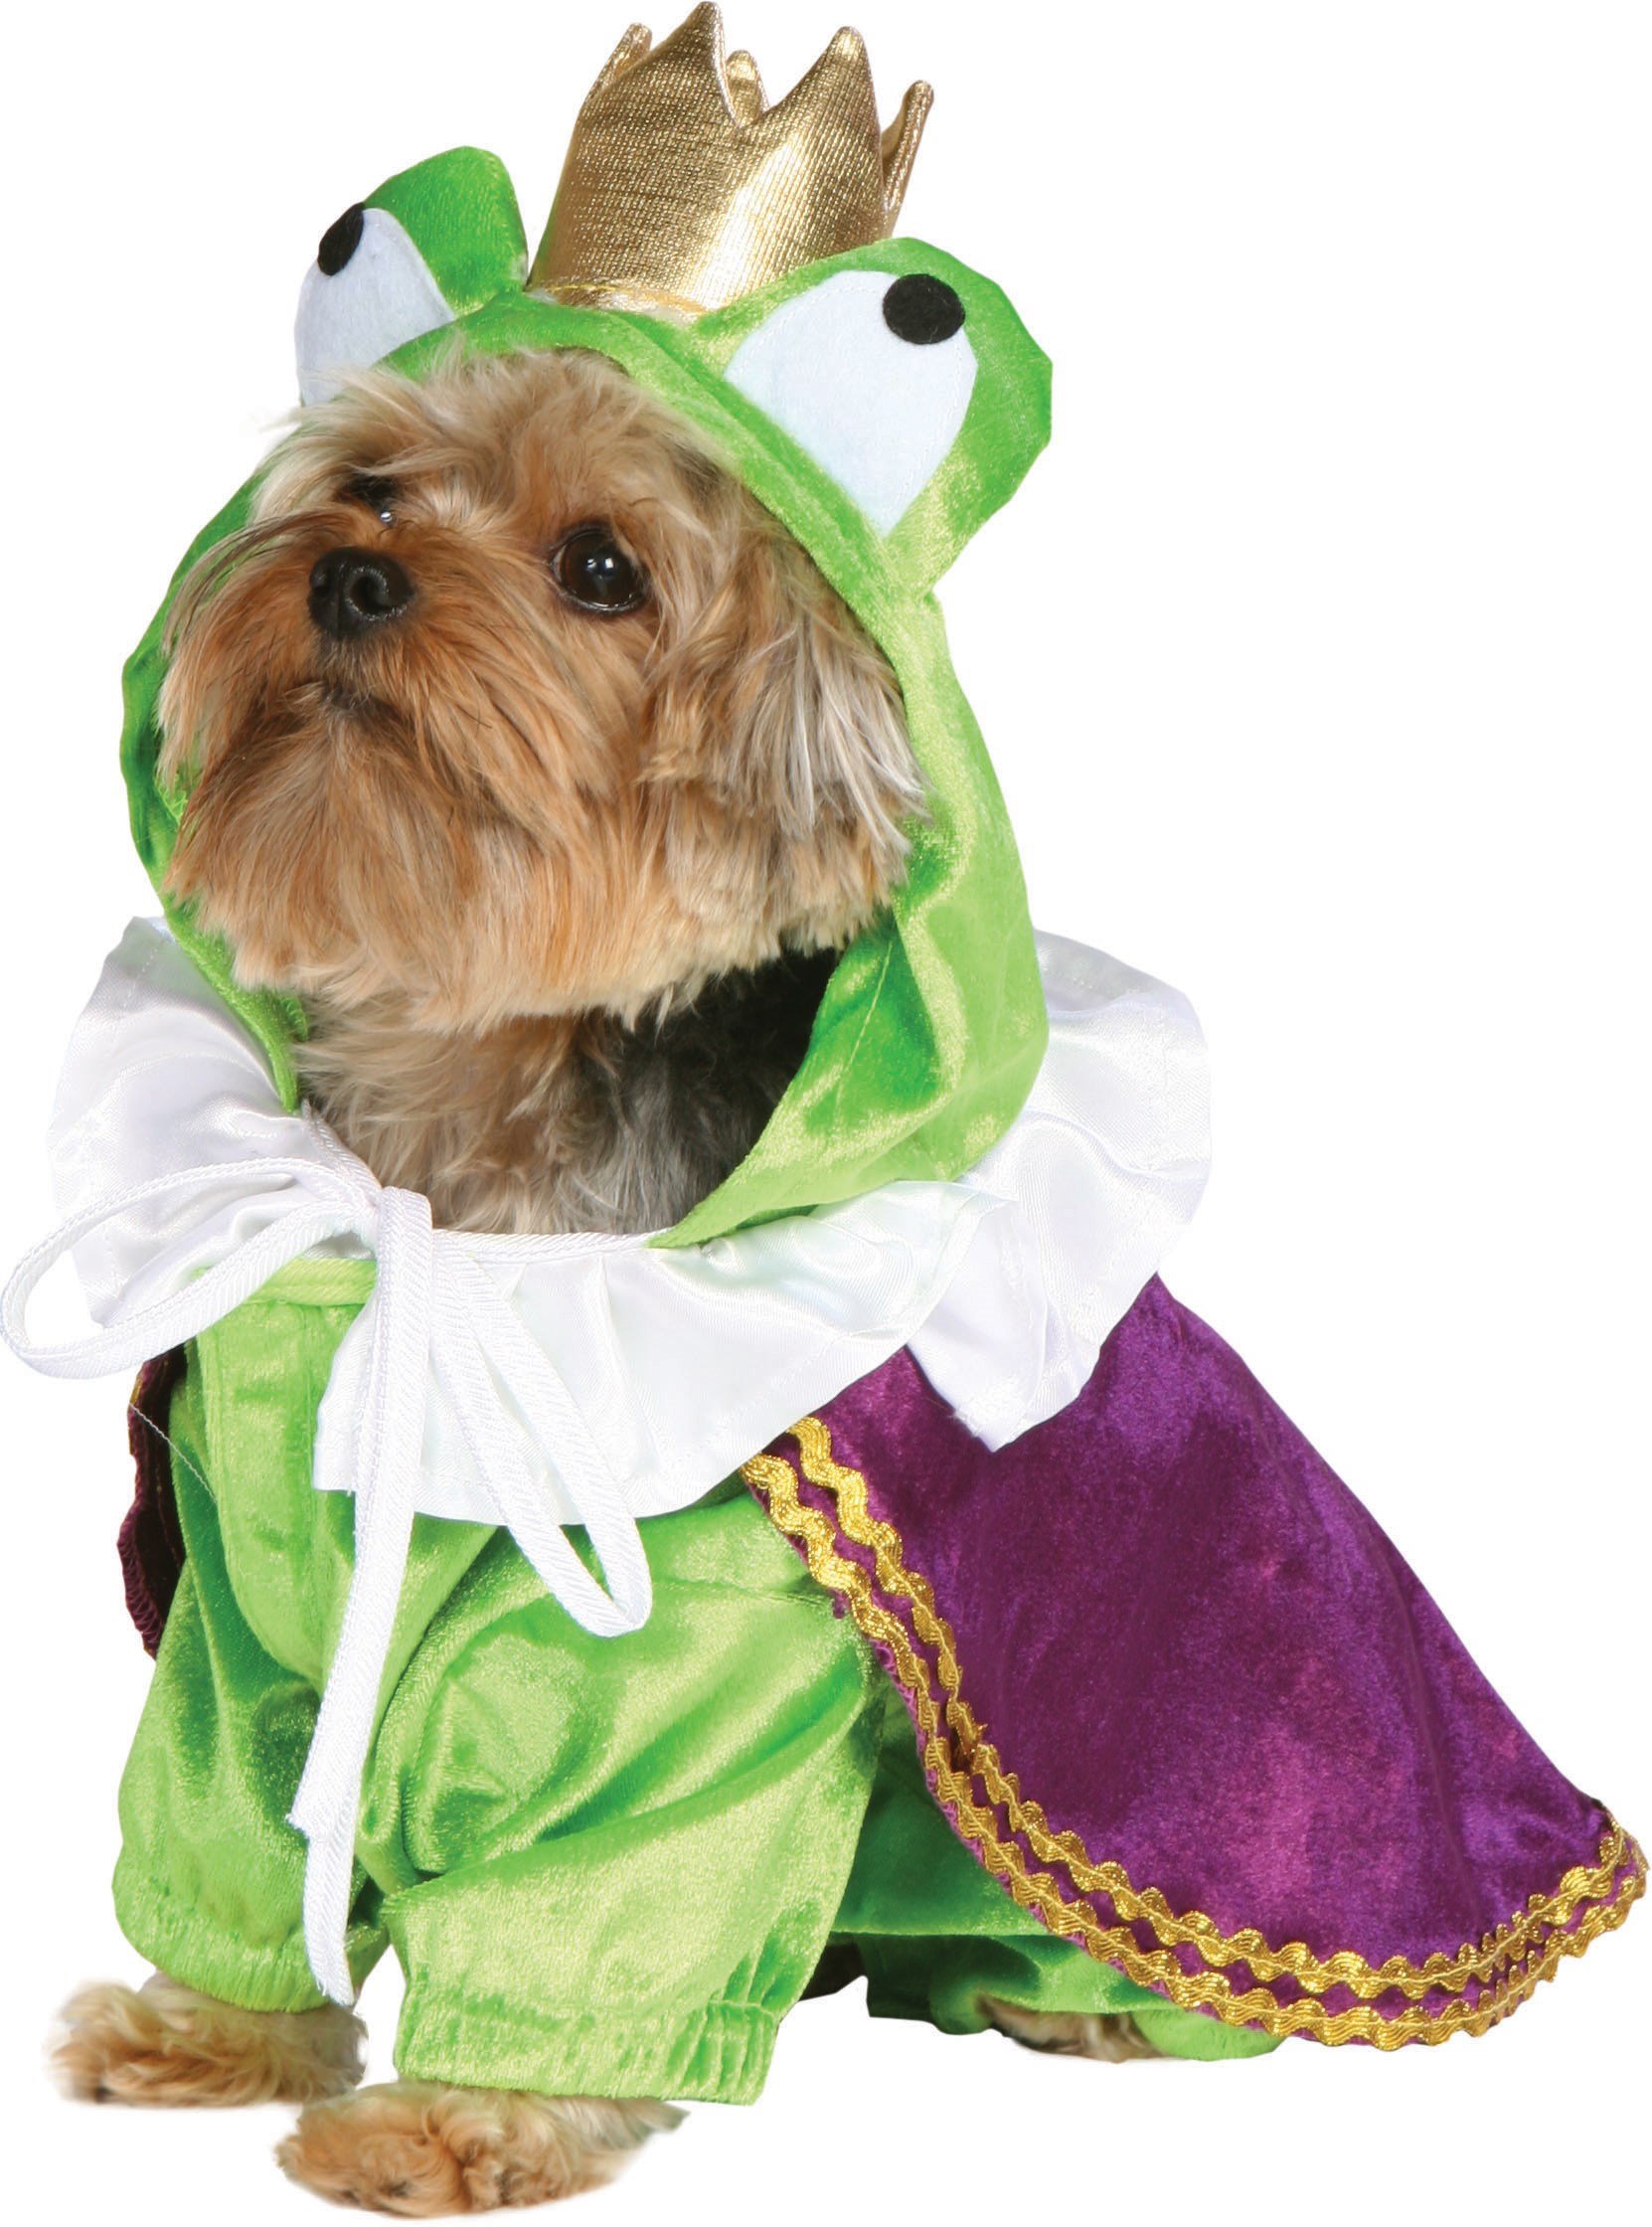 Frog Baby Costume on Frog Prince Dog Costume Dog Halloween Costume   Dog Costumes   Pet